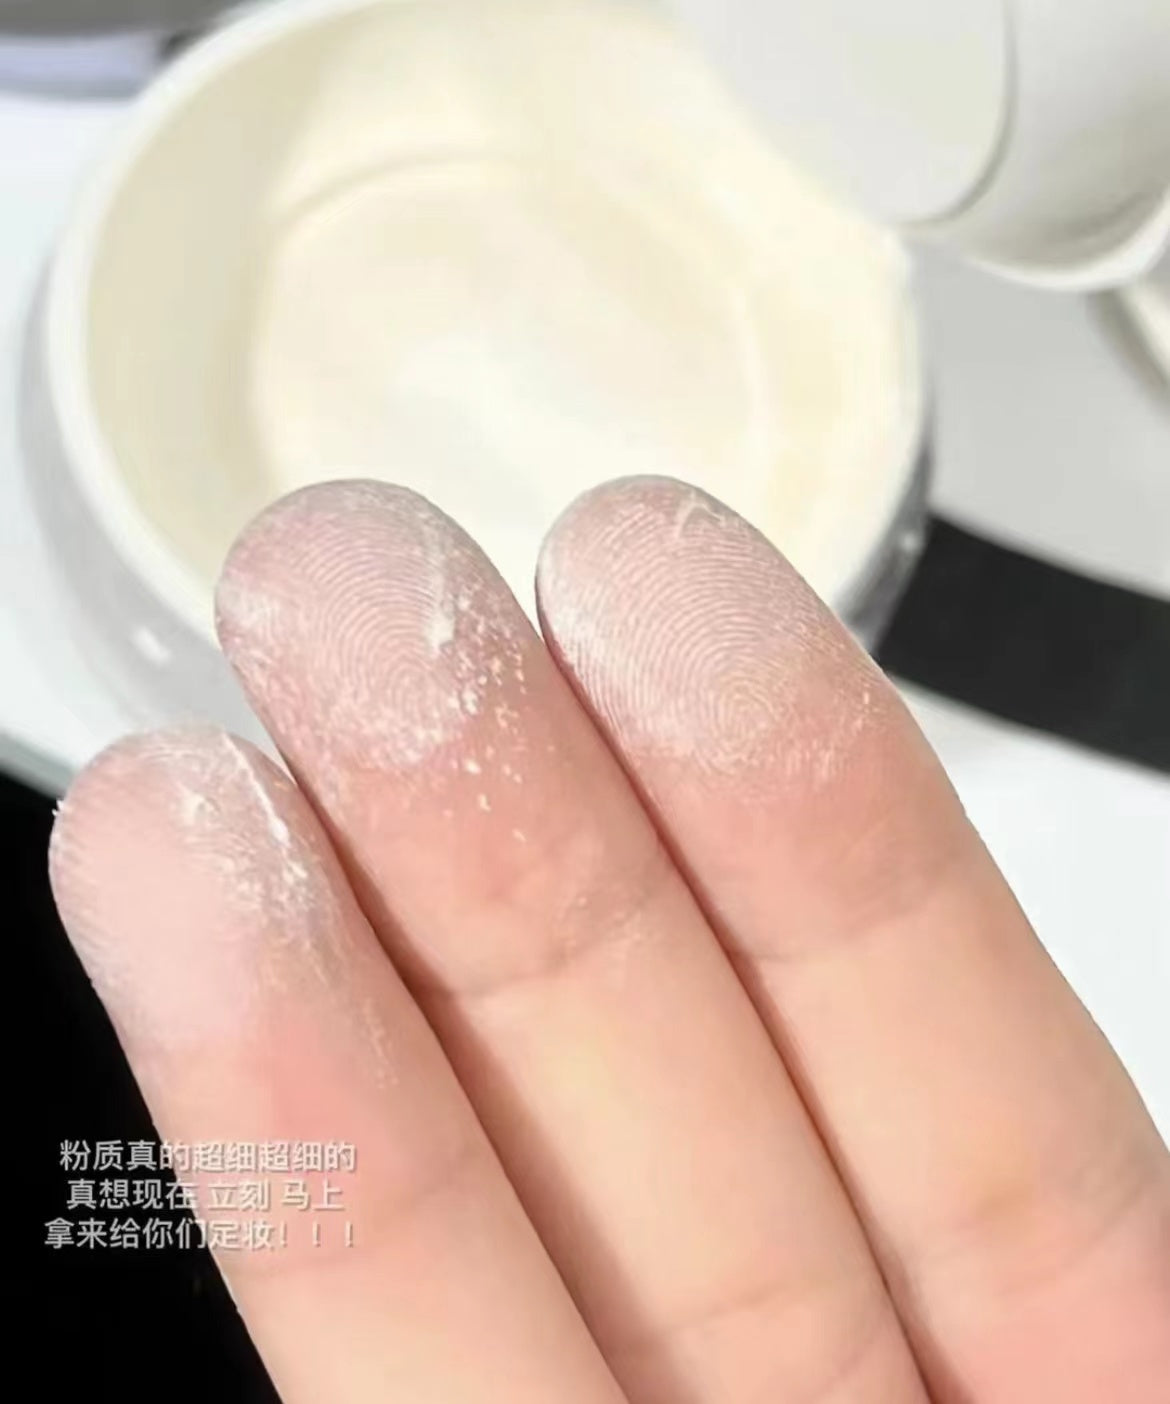 RNW Light Makeup Monochromatic Powder 8g 如薇粉饰轻妆单色散粉